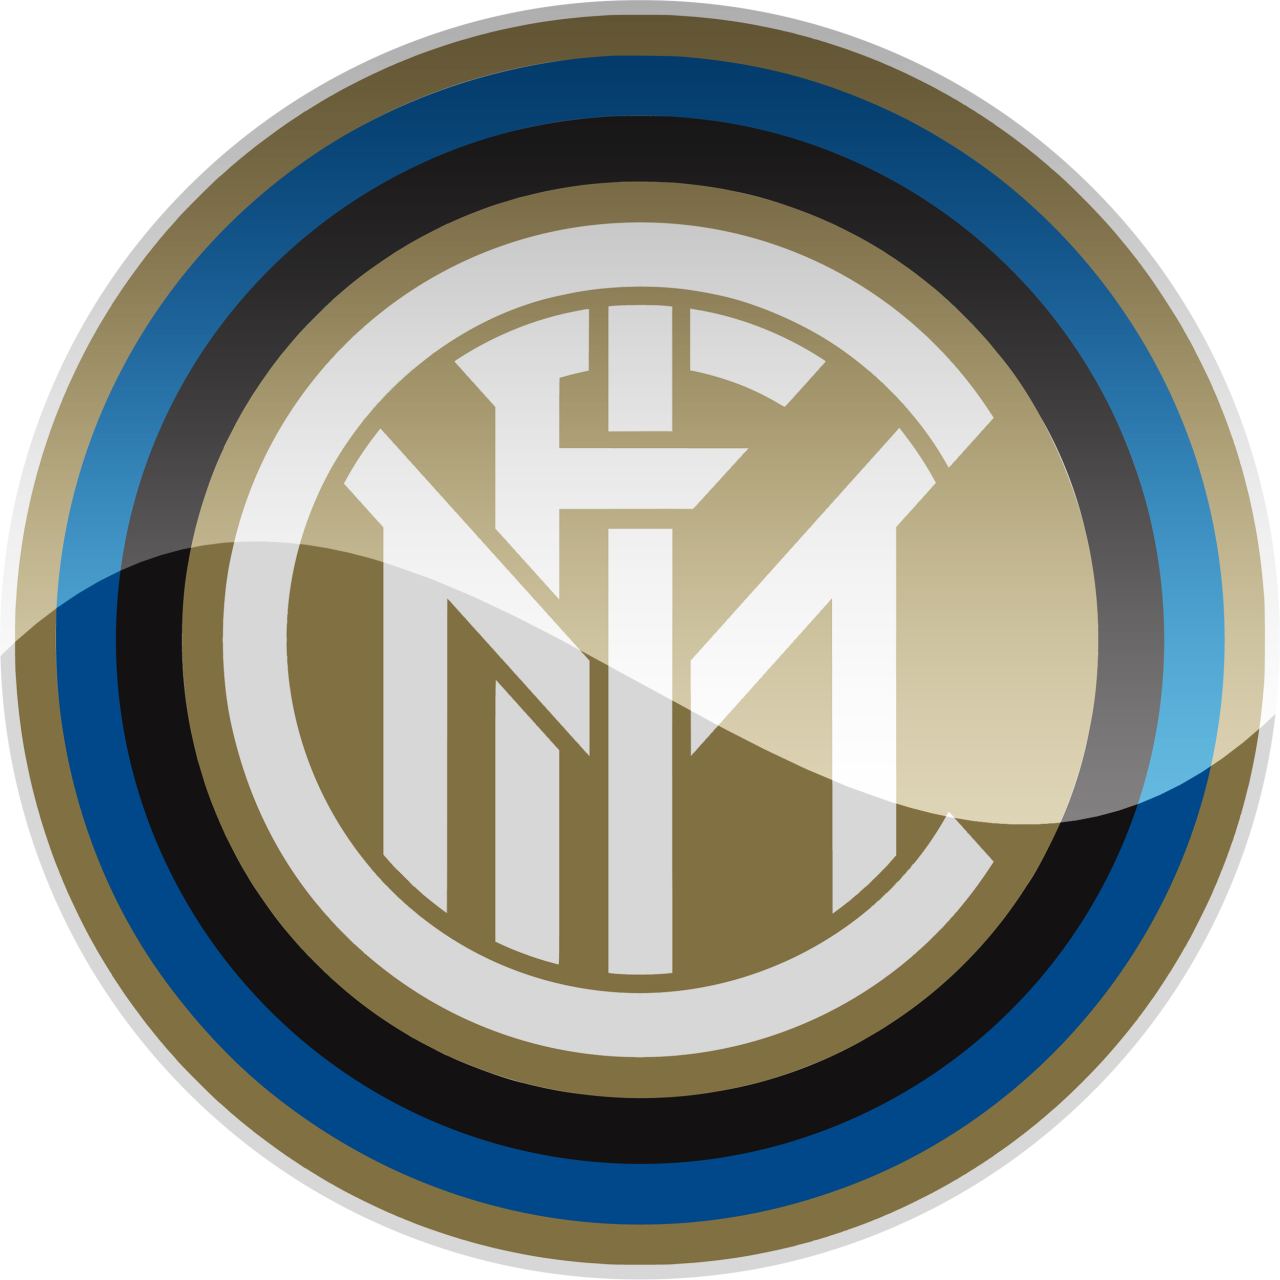 FC Inter HD Logo